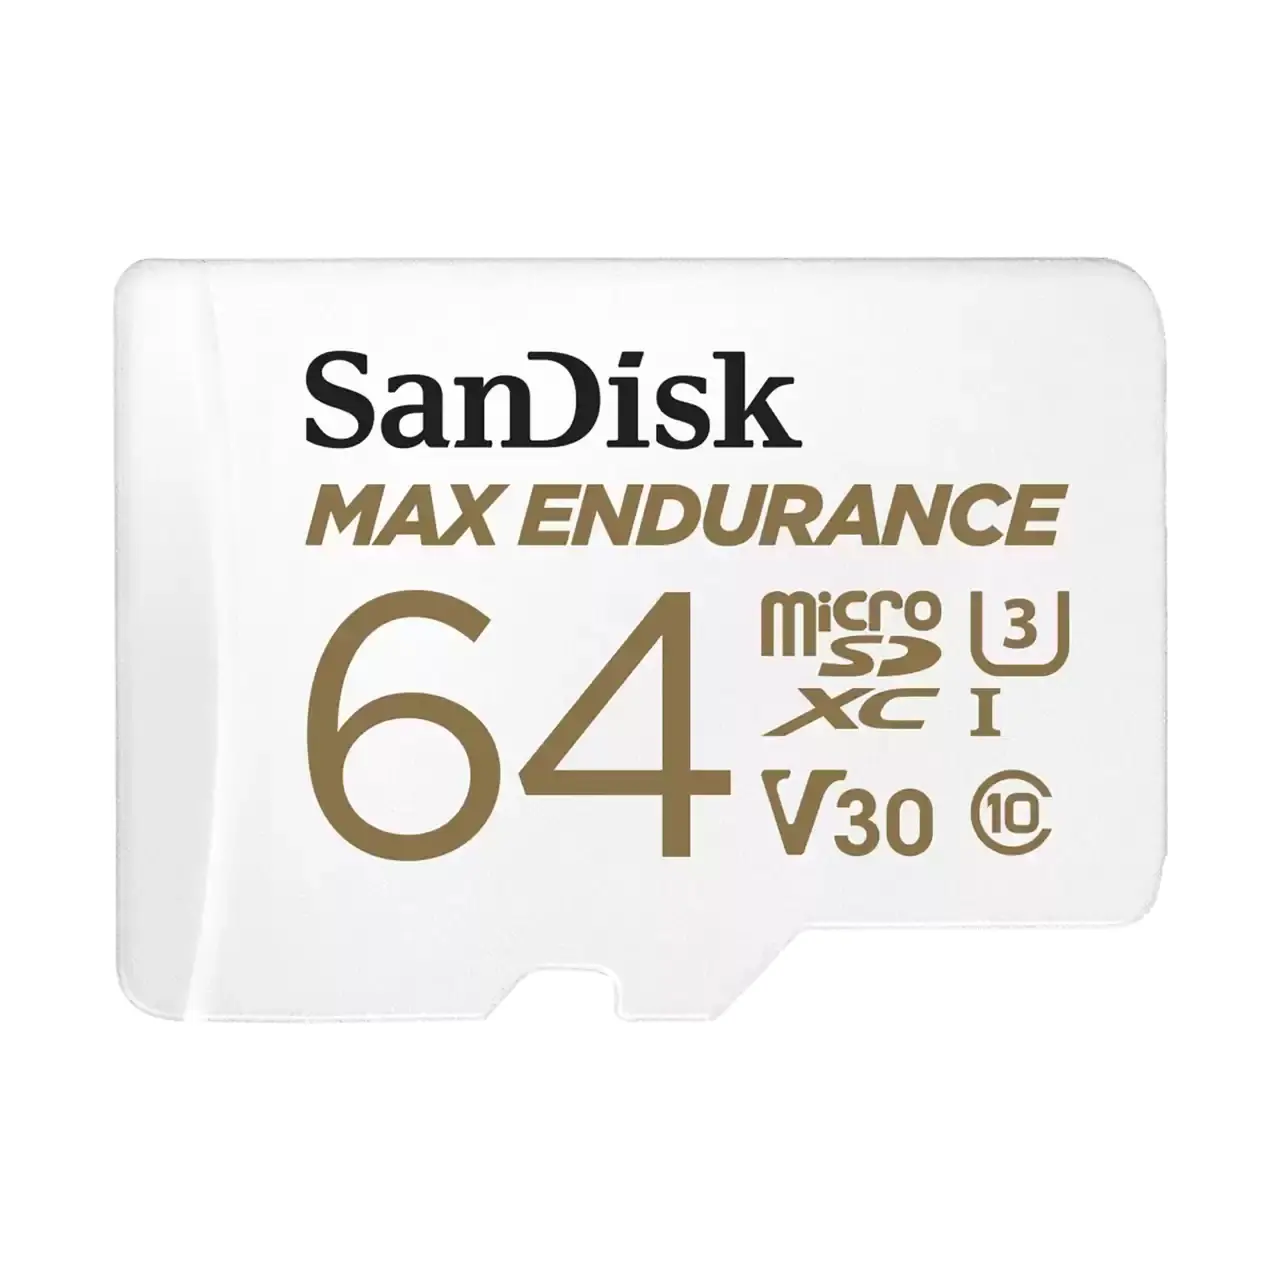 100% Original SanDisk SDSQQVR 64GB MAX ENDURANCE memory card micro SD Card